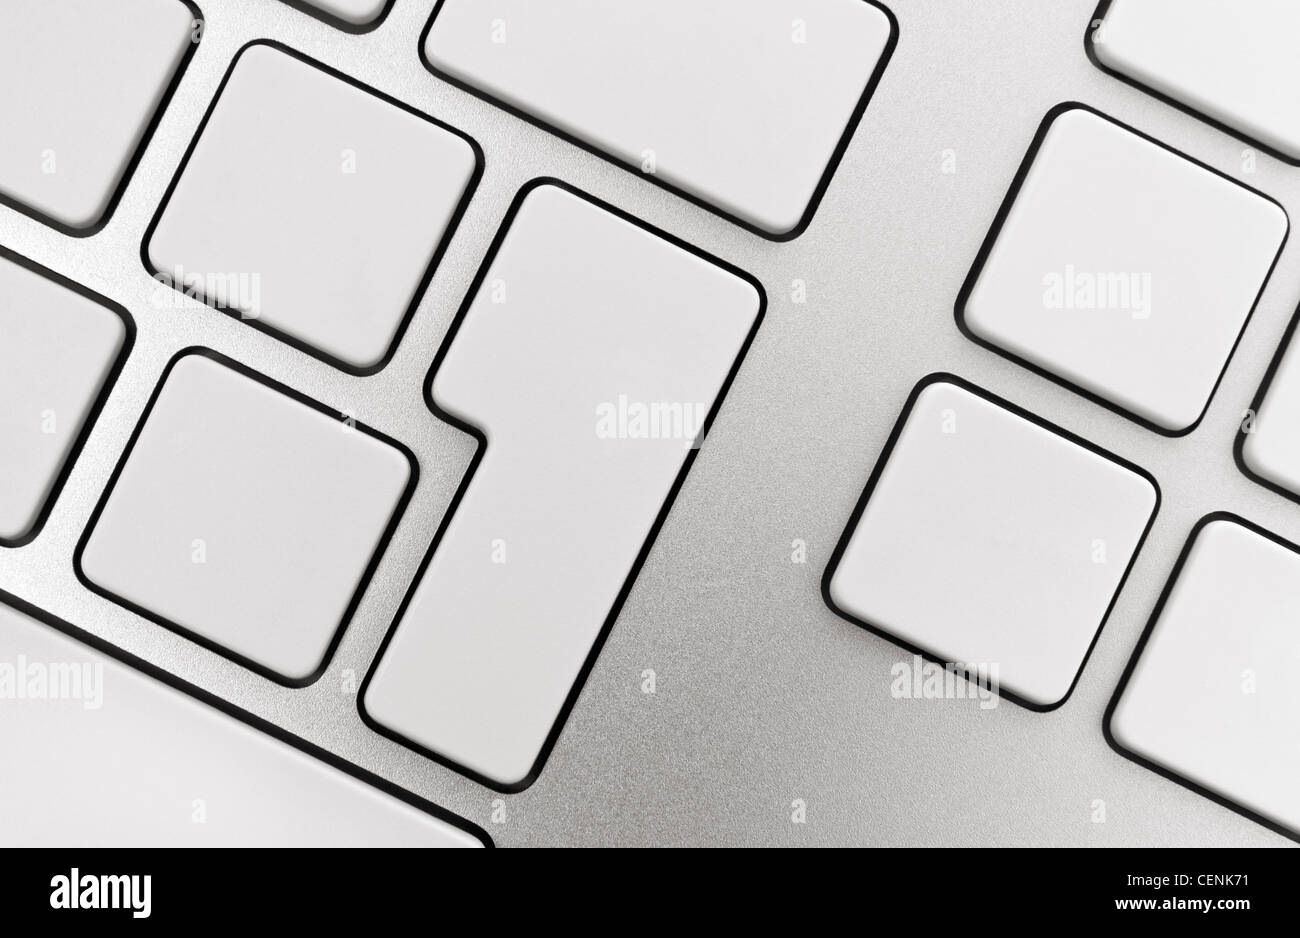 Blank buttons on modern aluminum keyboard. Stock Photo